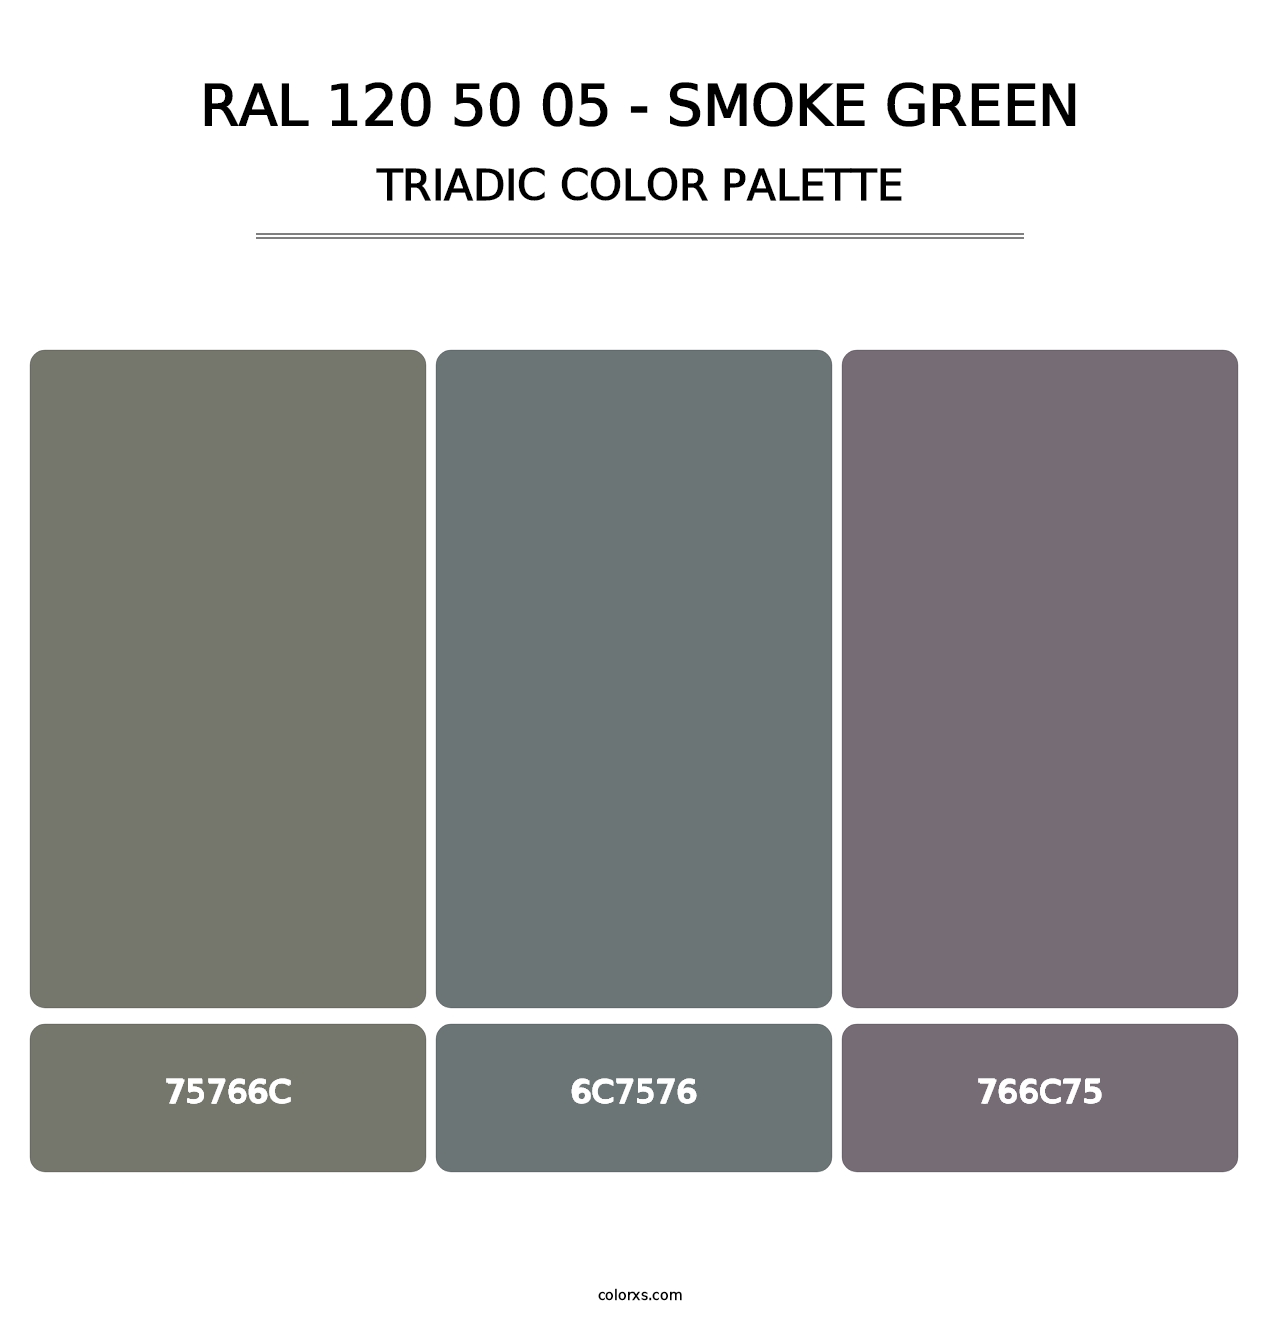 RAL 120 50 05 - Smoke Green - Triadic Color Palette